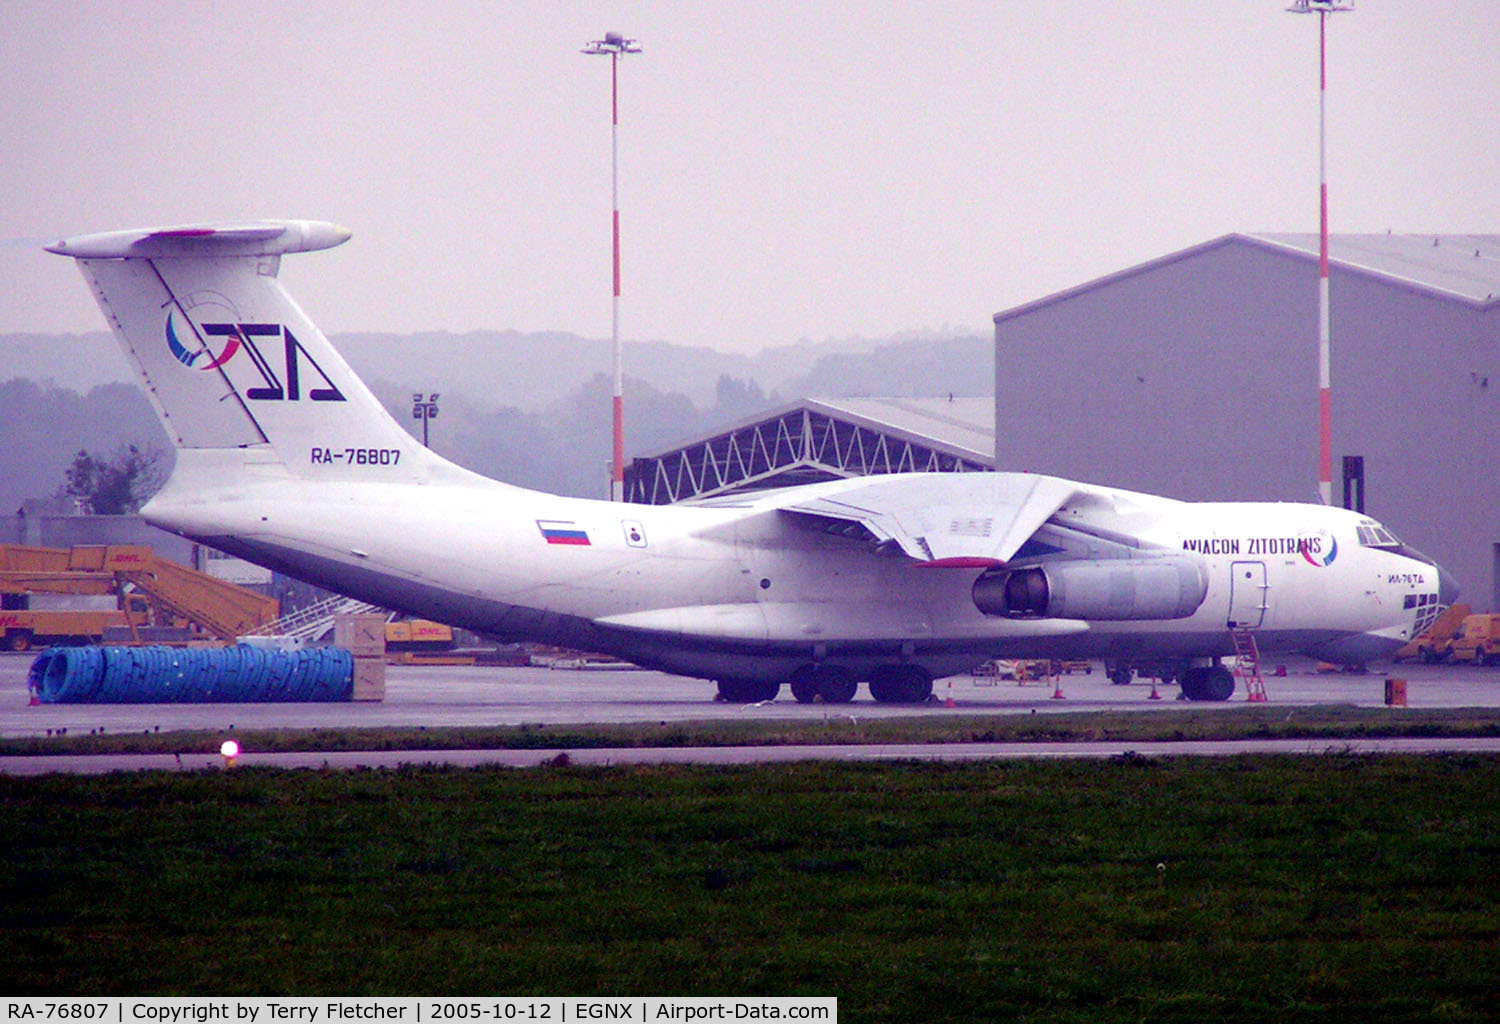 RA-76807, 1991 Ilyushin IL-76TD C/N 1013405176, Aviacom Zitotrans' IL76 on a Humanatarian Aid flight at East Midlands in 2005